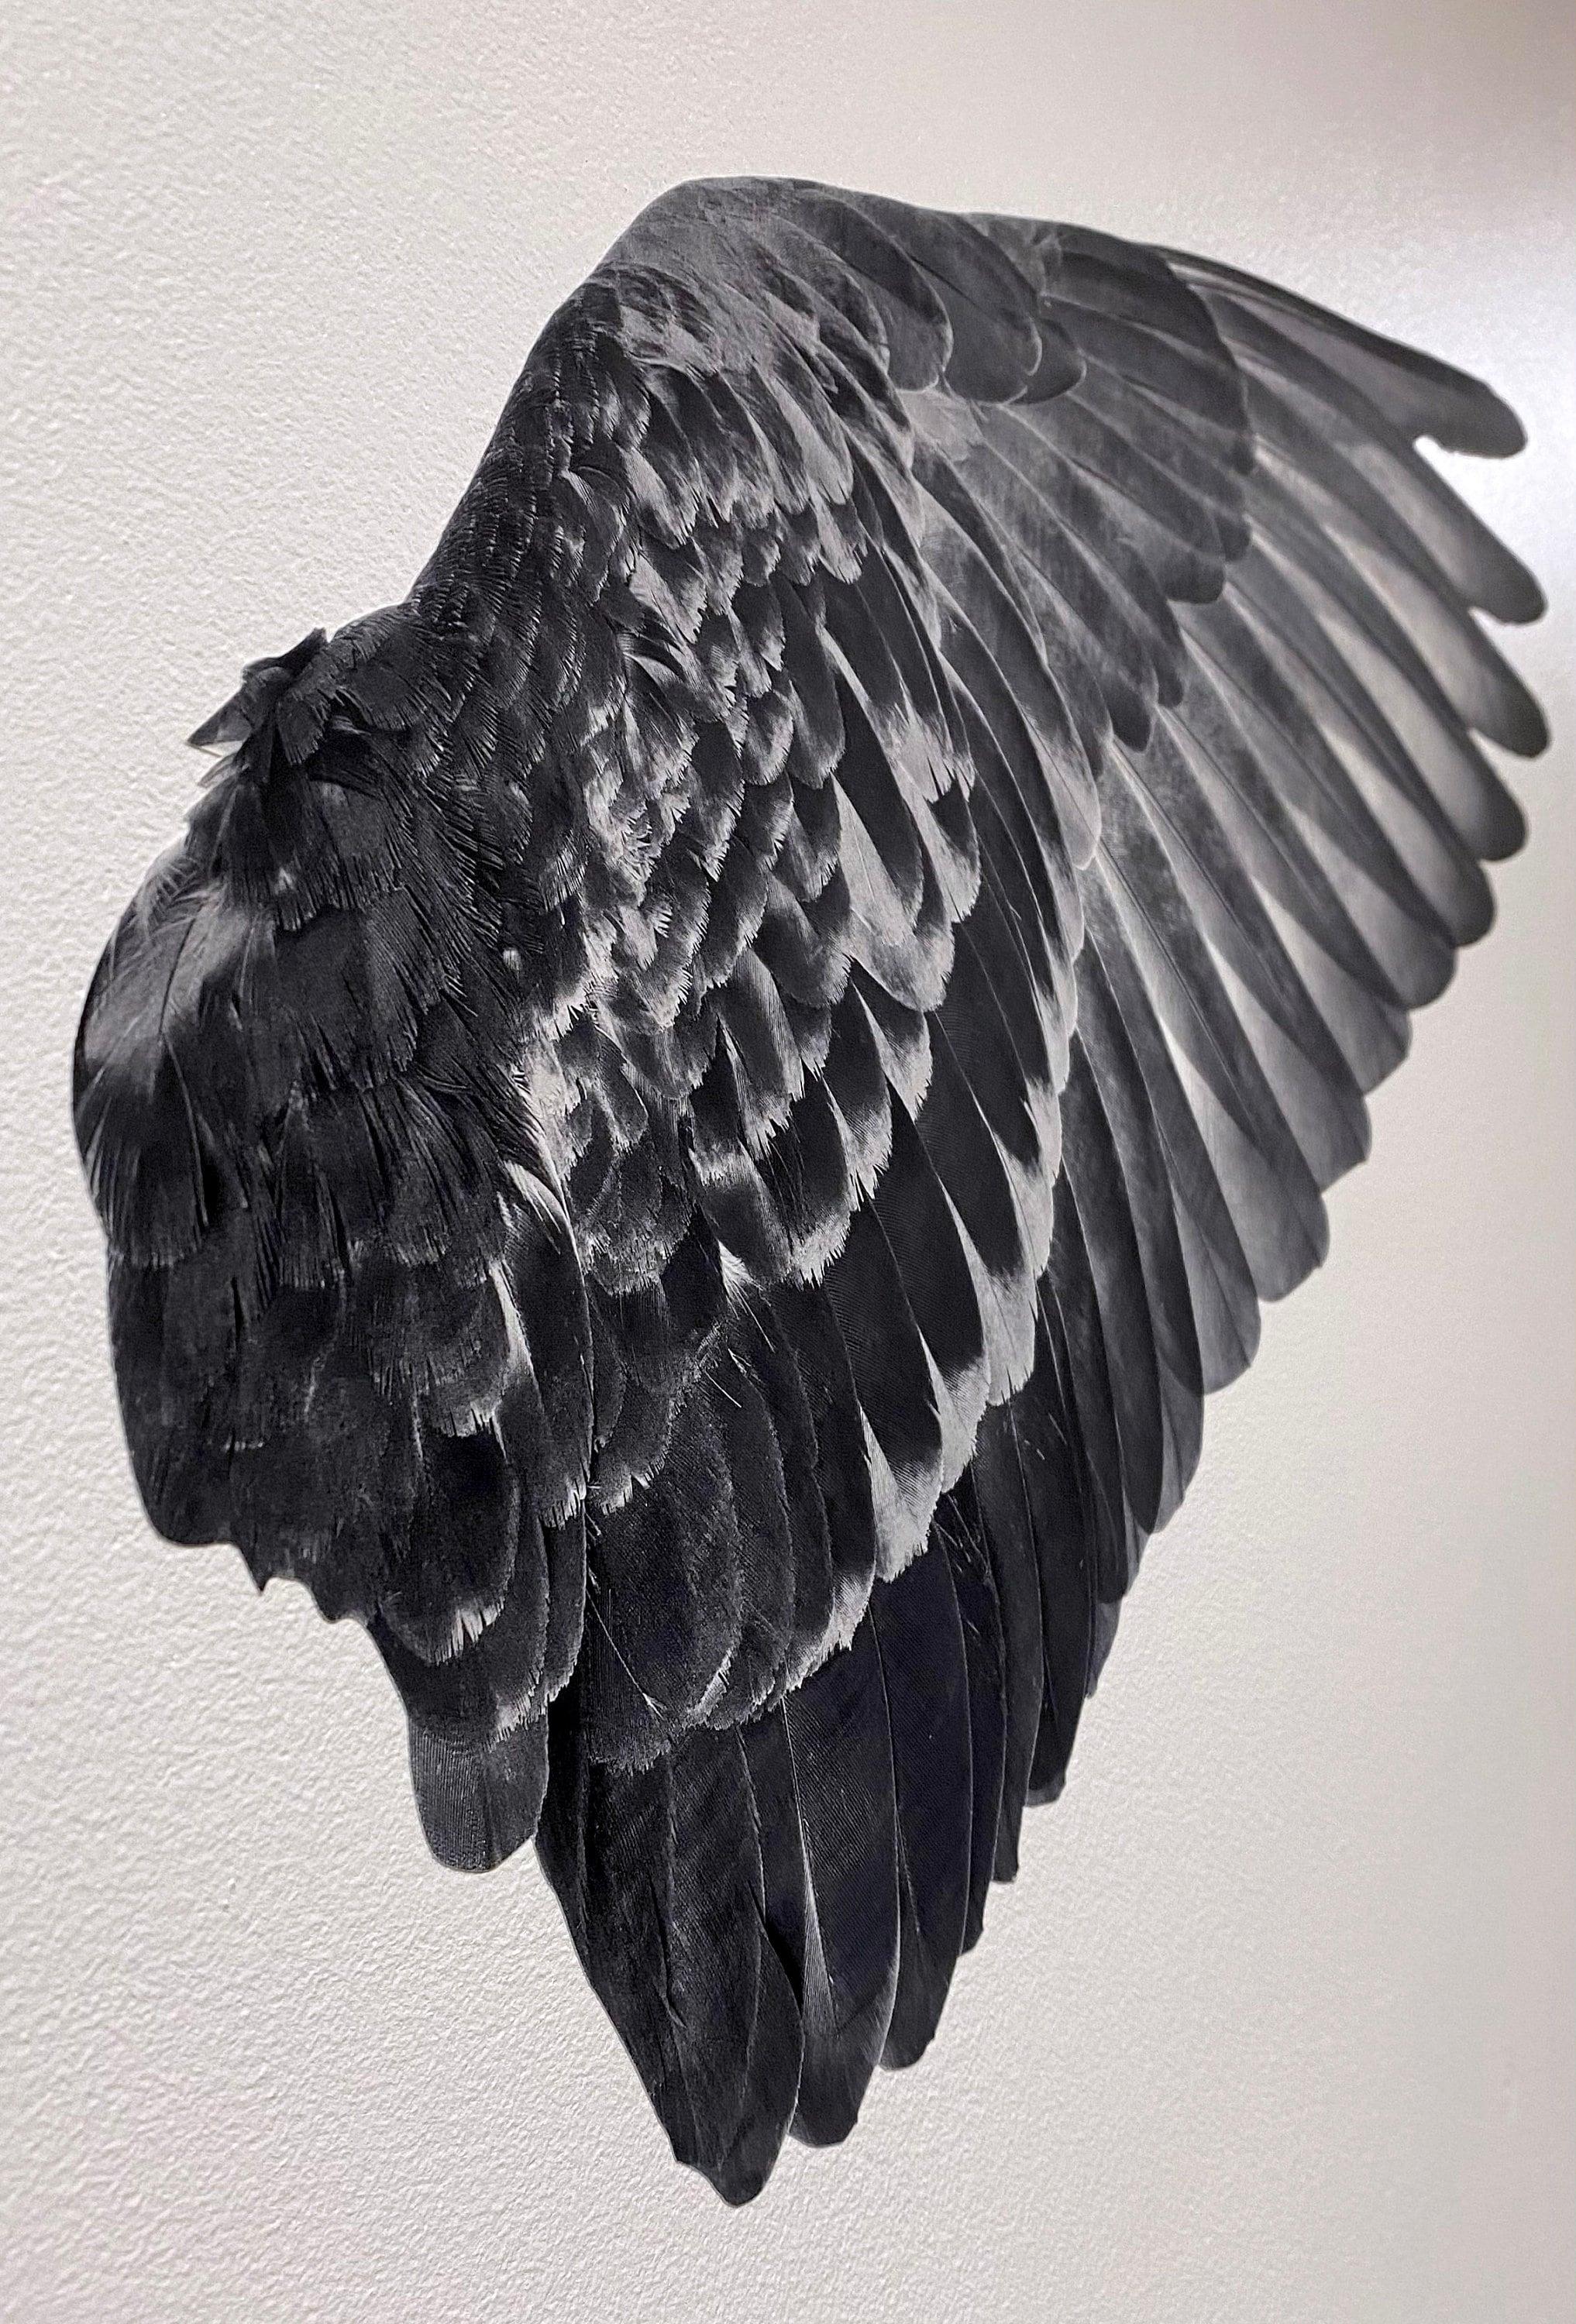 Gray Angel Wings Decal, Street Art, Graffiti, Instagram image,